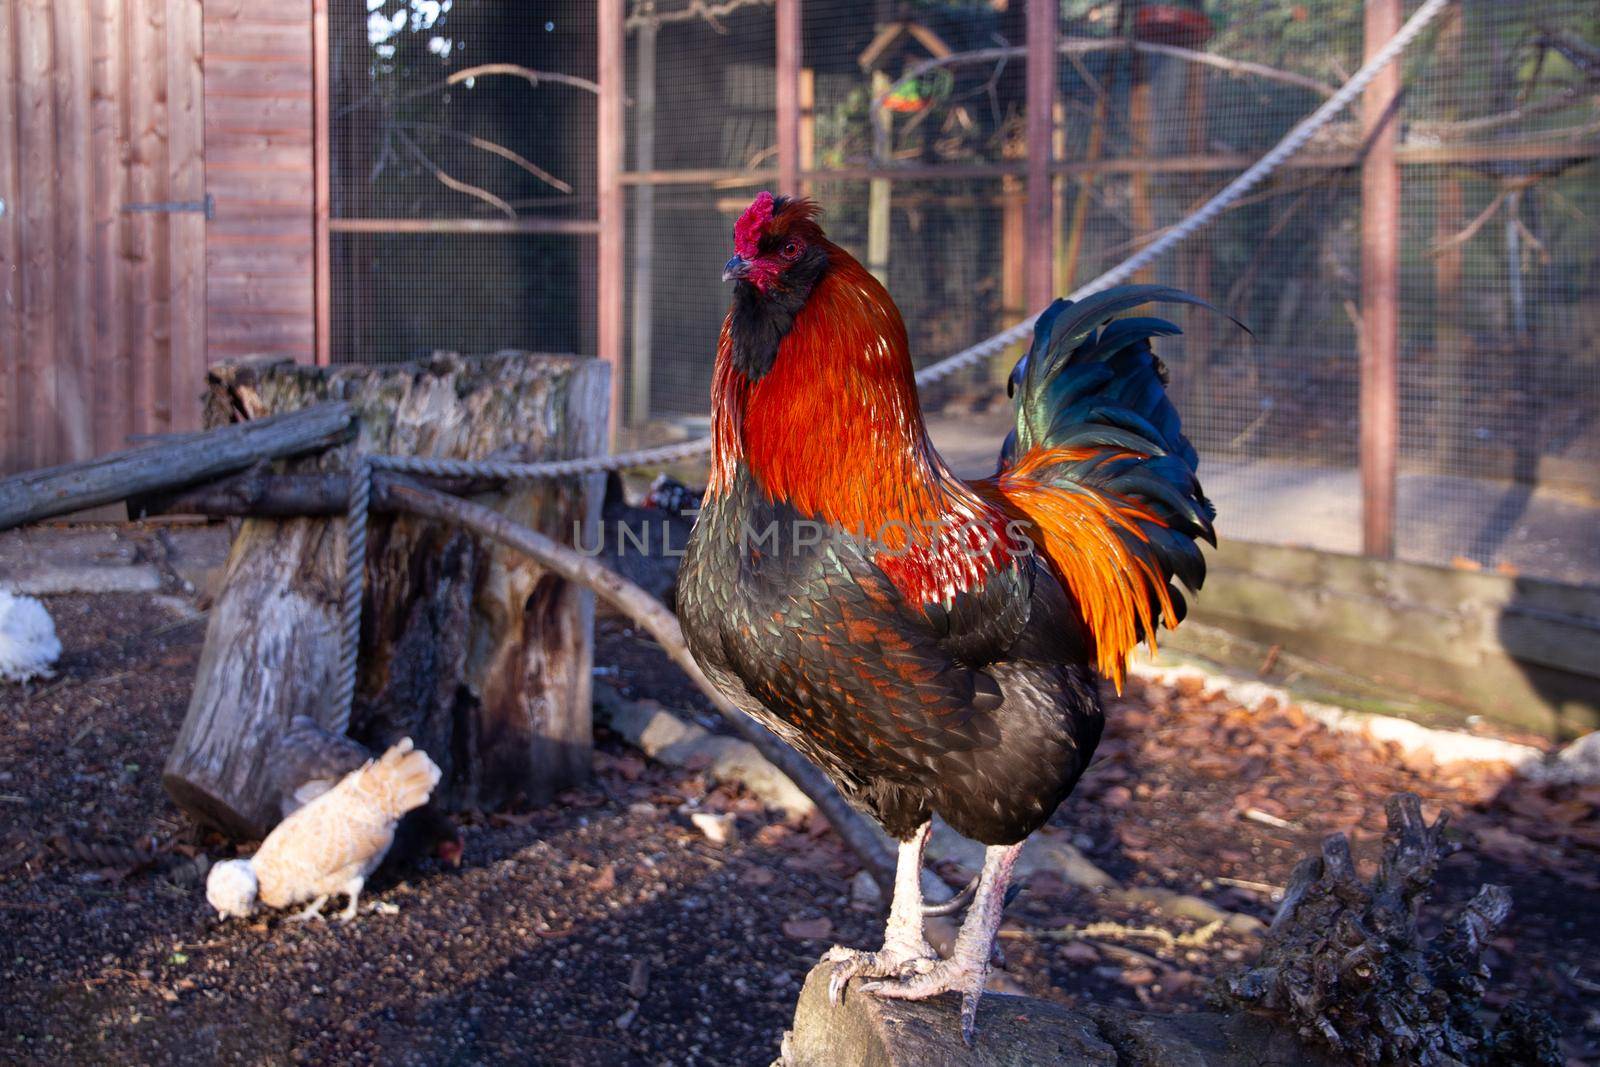 Full-length of an orange rooster standing on rock inside of a pen